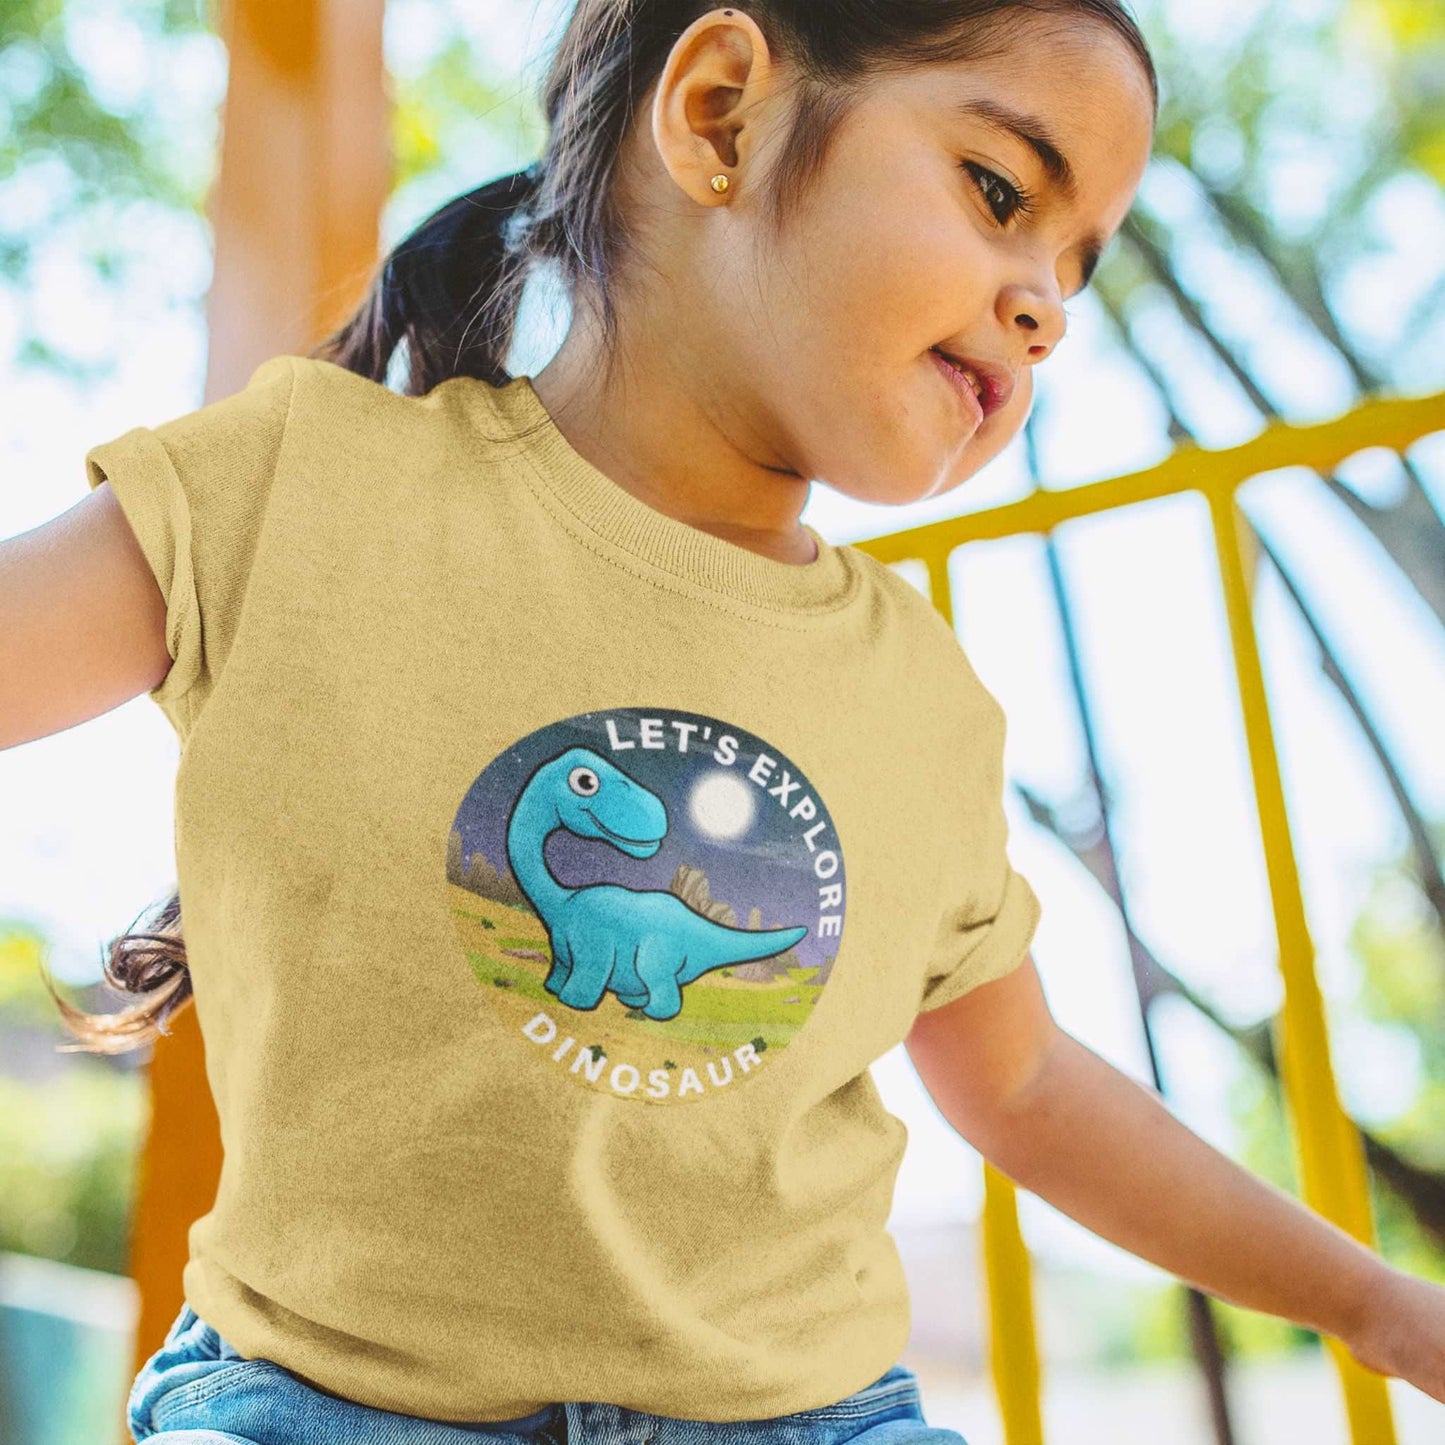 Let's Explore Dinosaur Toddler Short Sleeve Tee - ZumBuys